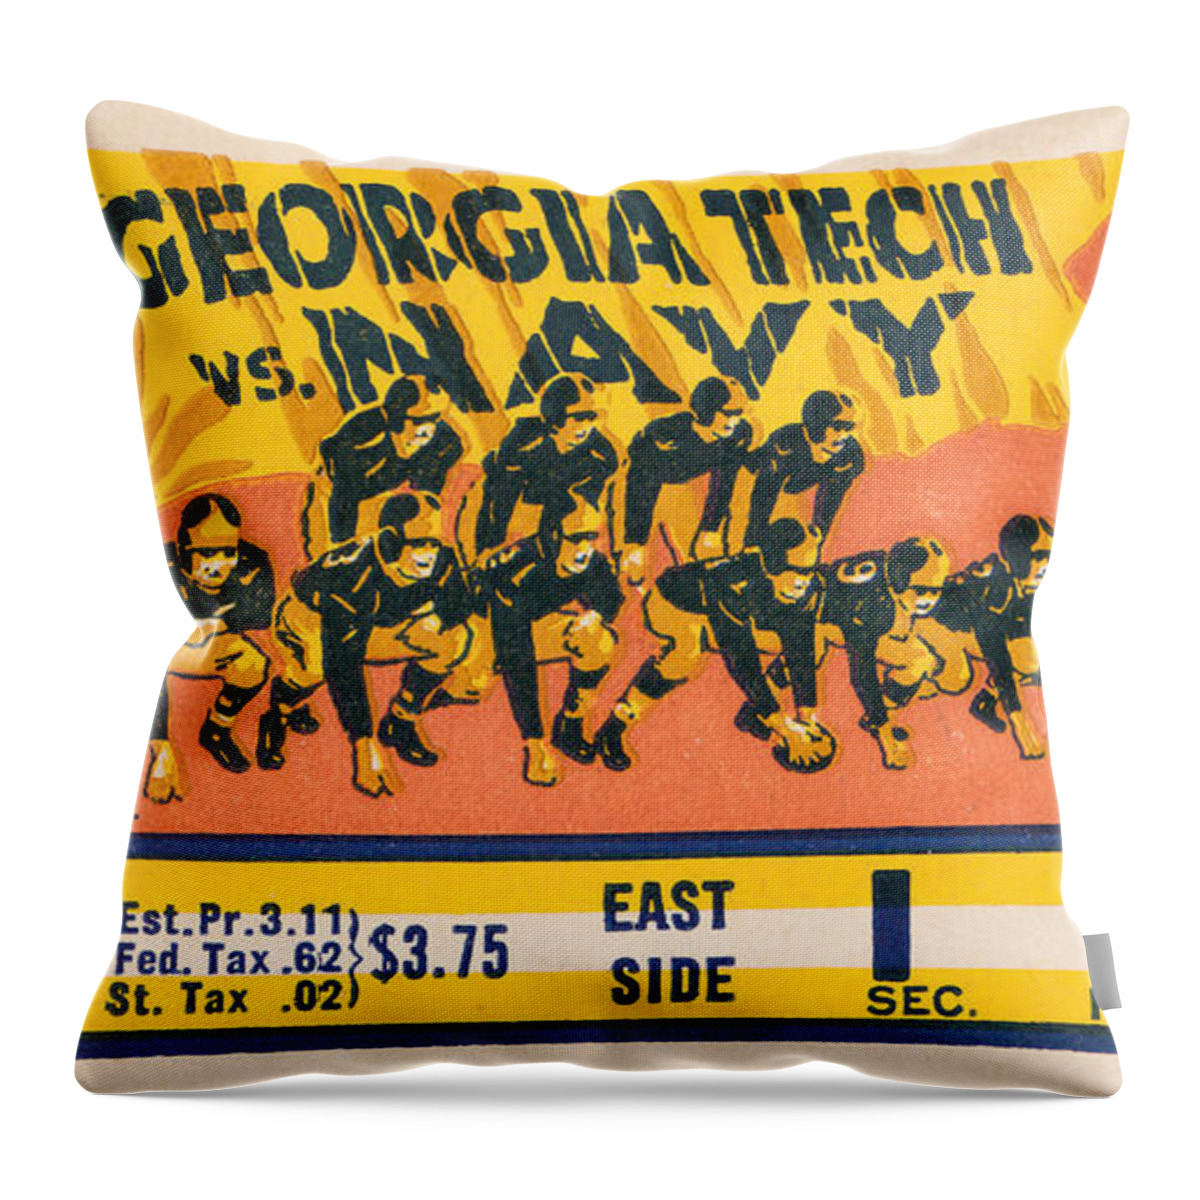 Georgia Tech Throw Pillow featuring the mixed media 1947 Georgia Tech vs. Navy by Row One Brand